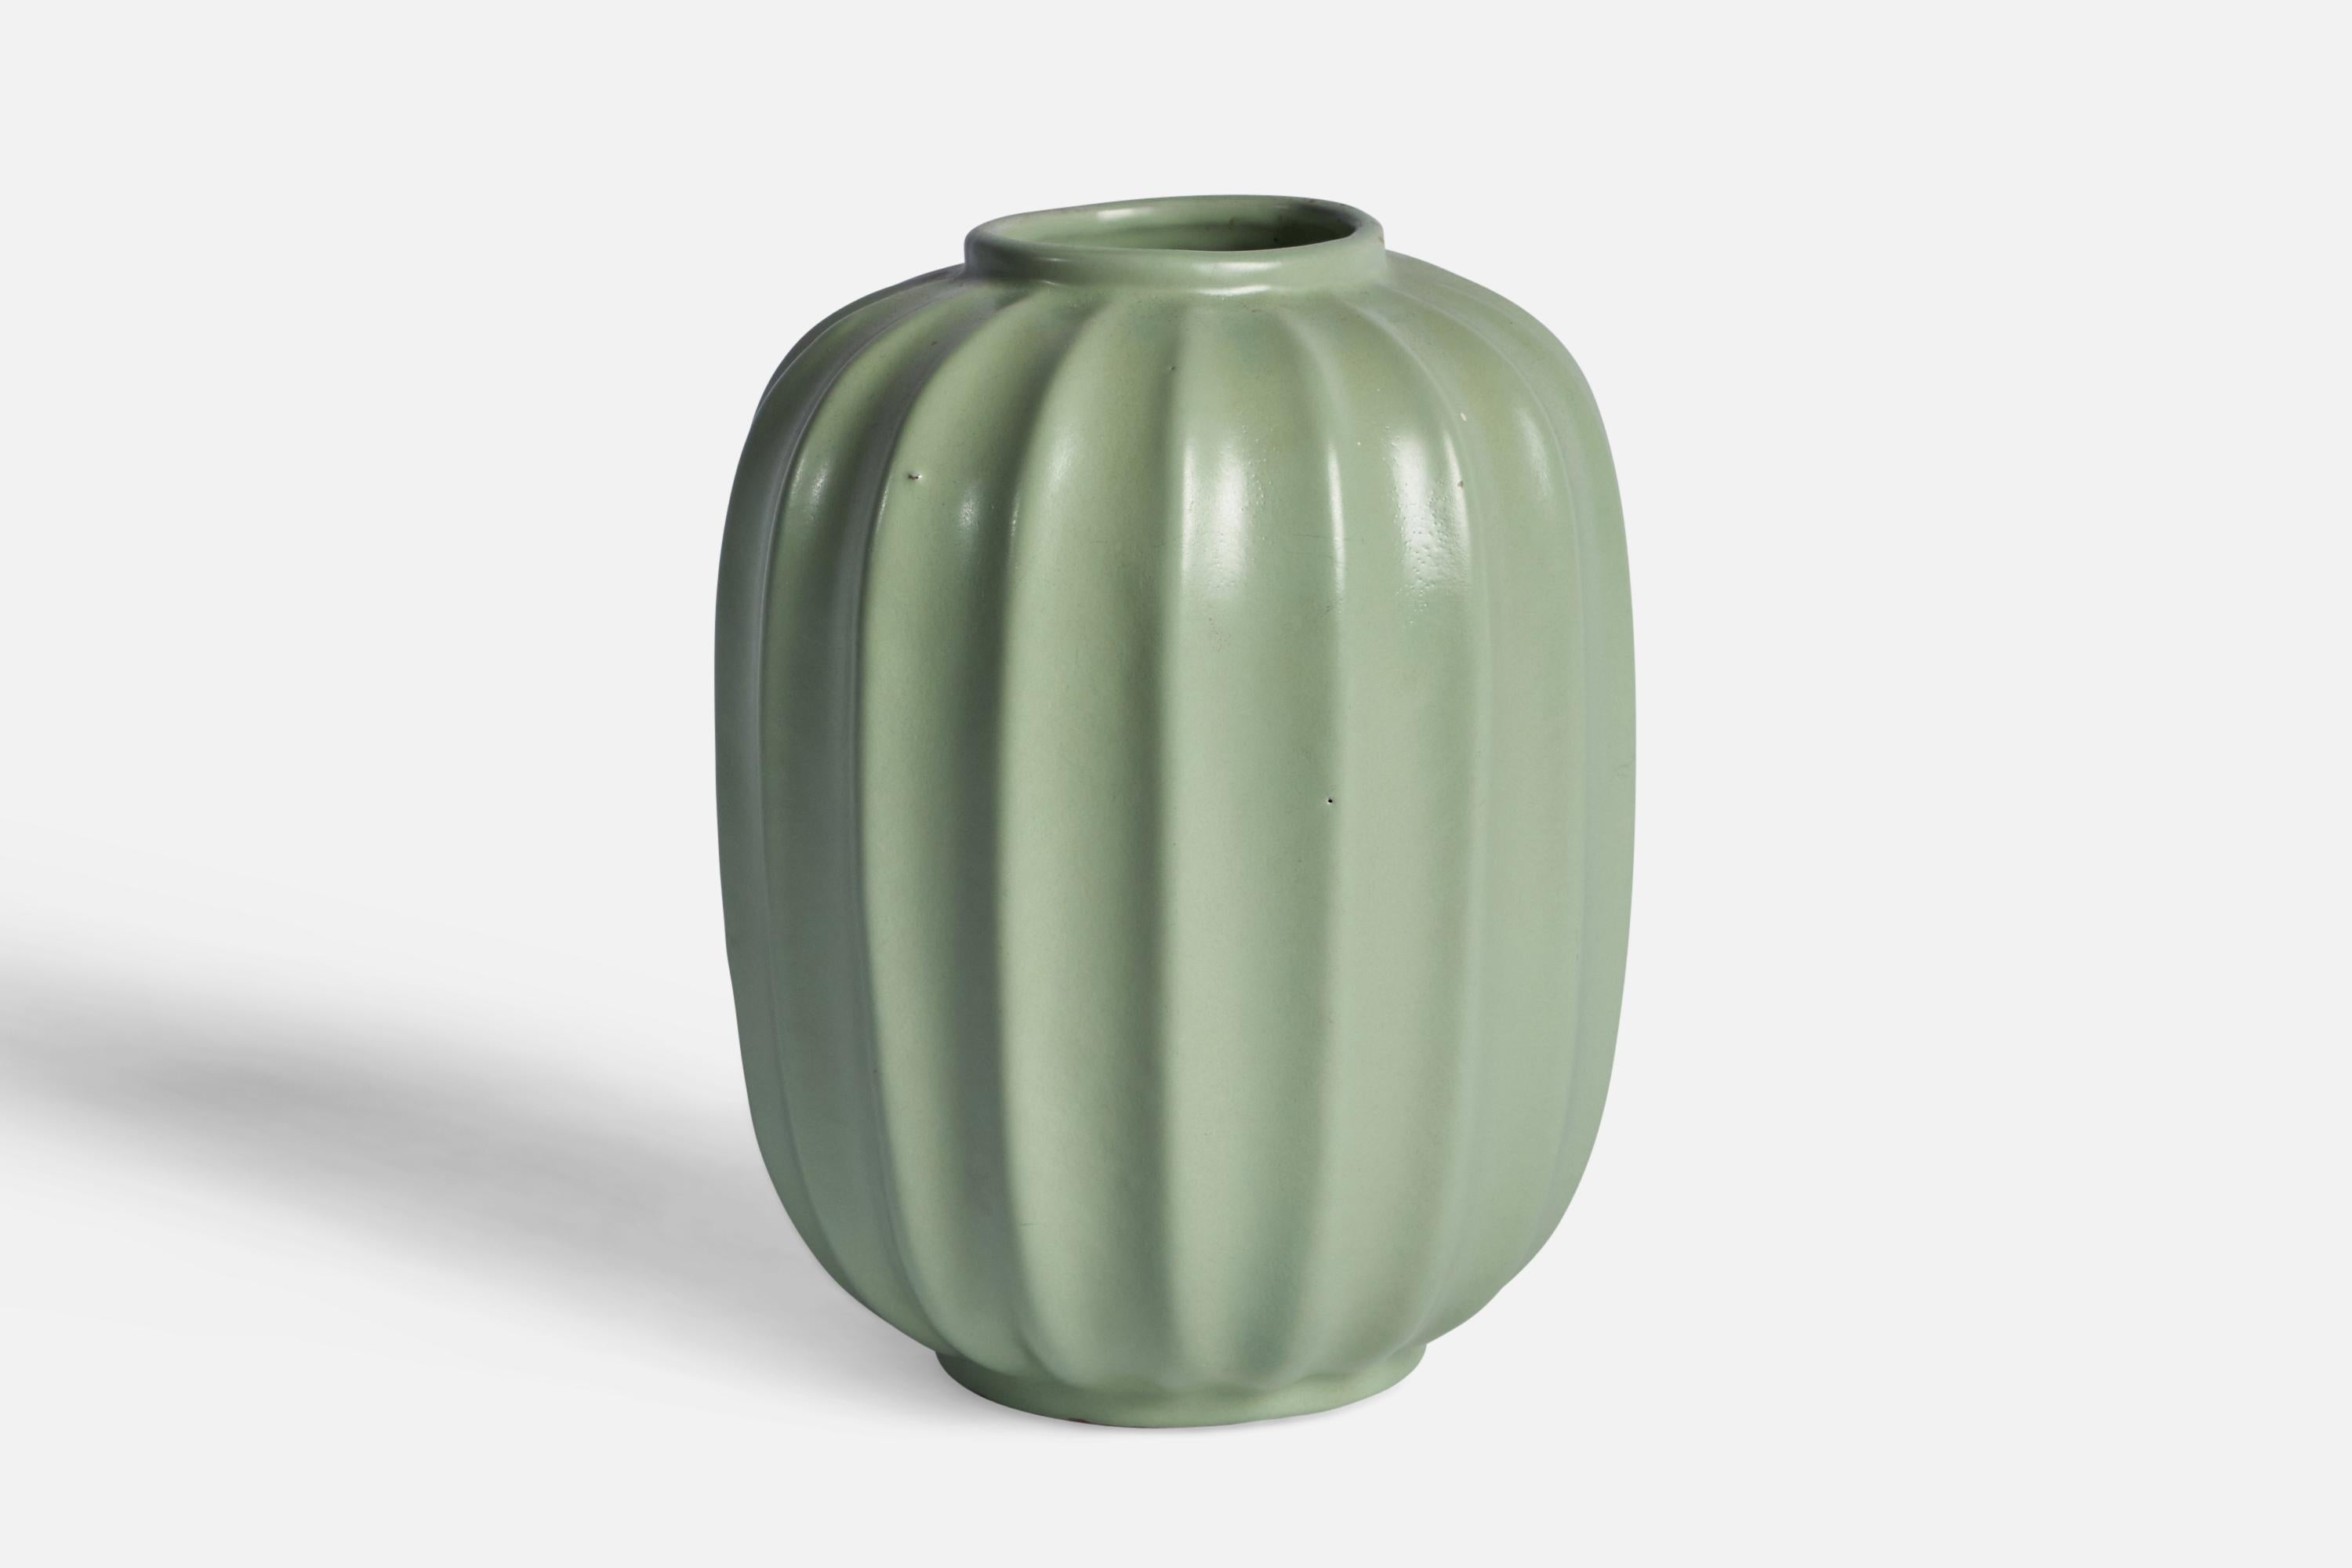 A green-glazed fluted vase designed and produced by Upsala-Ekeby, Sweden, 1930s.